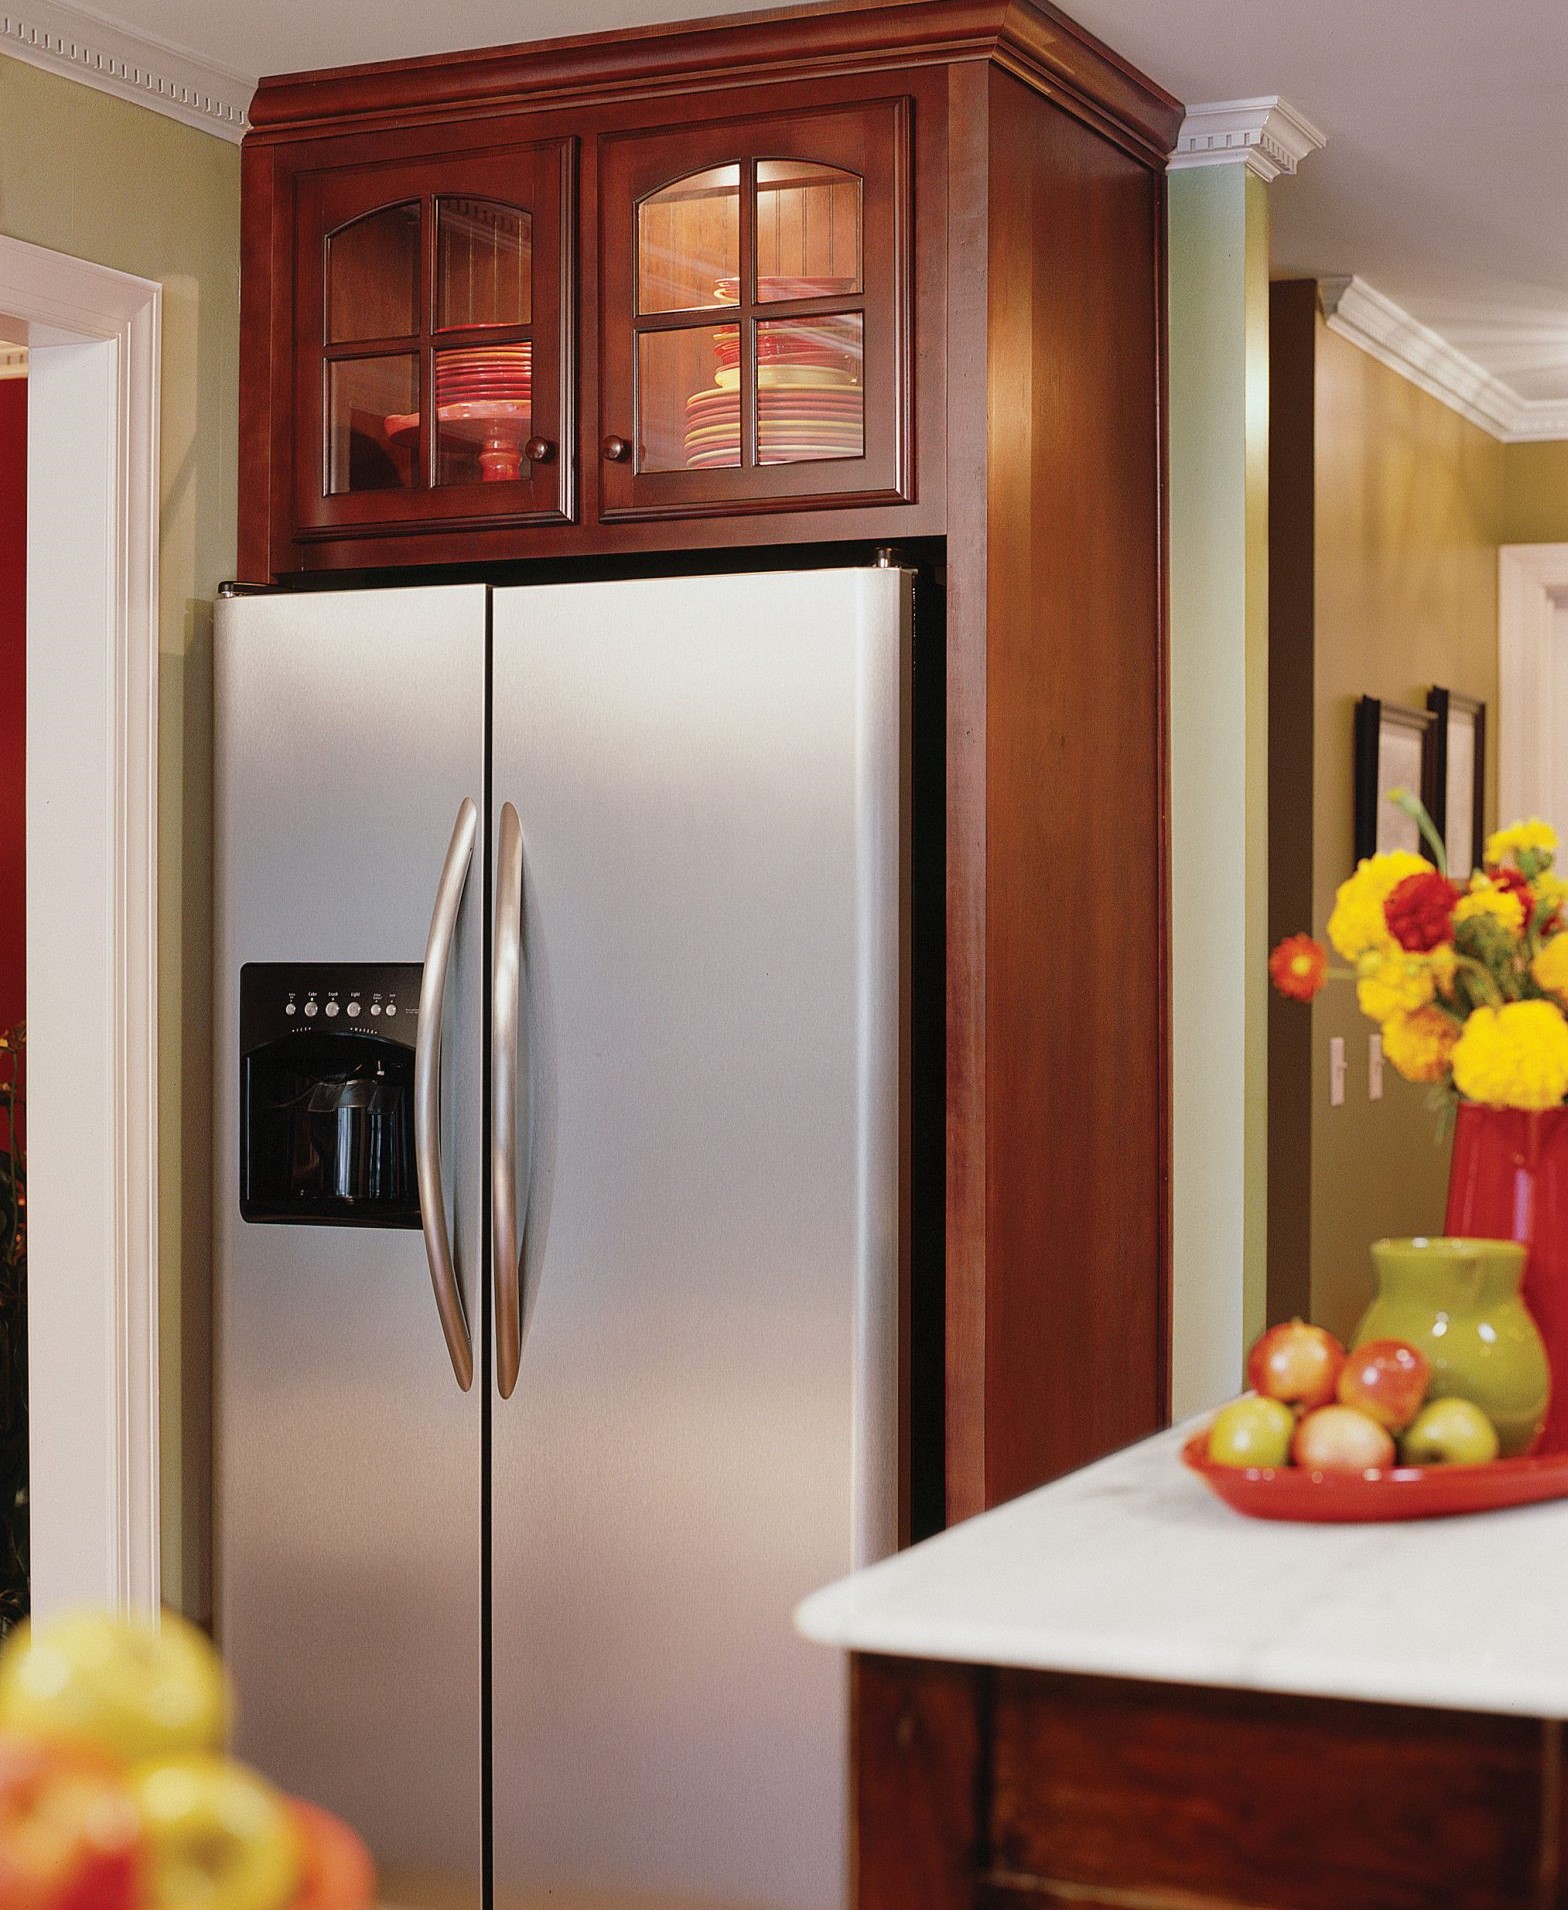 Cupboard glass fridge cooker. Холодильник на кухне. Холодильник в шкафу в кухне. Шкафчик над холодильником. Шкаф над холодильником в кухне.